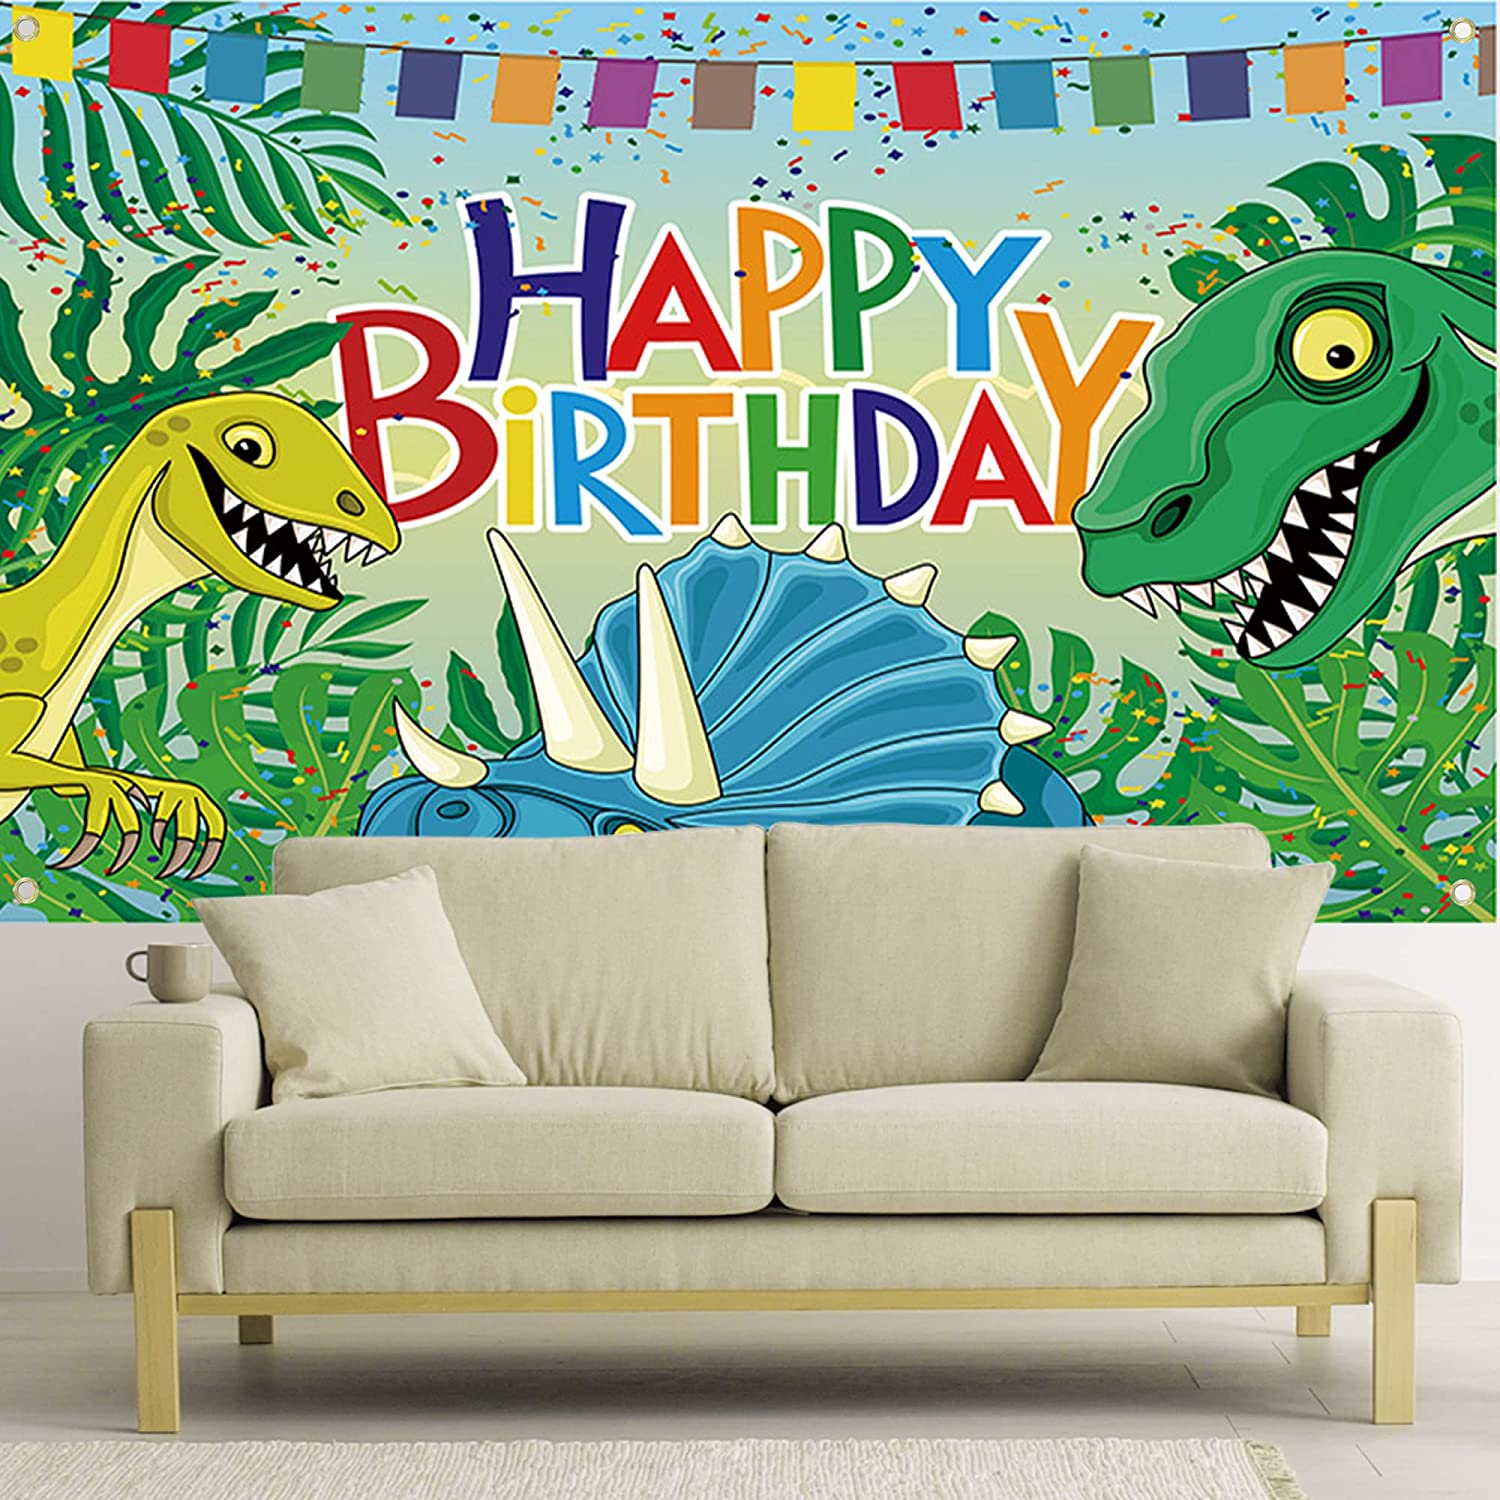 Birthday background poster with dinosaur design